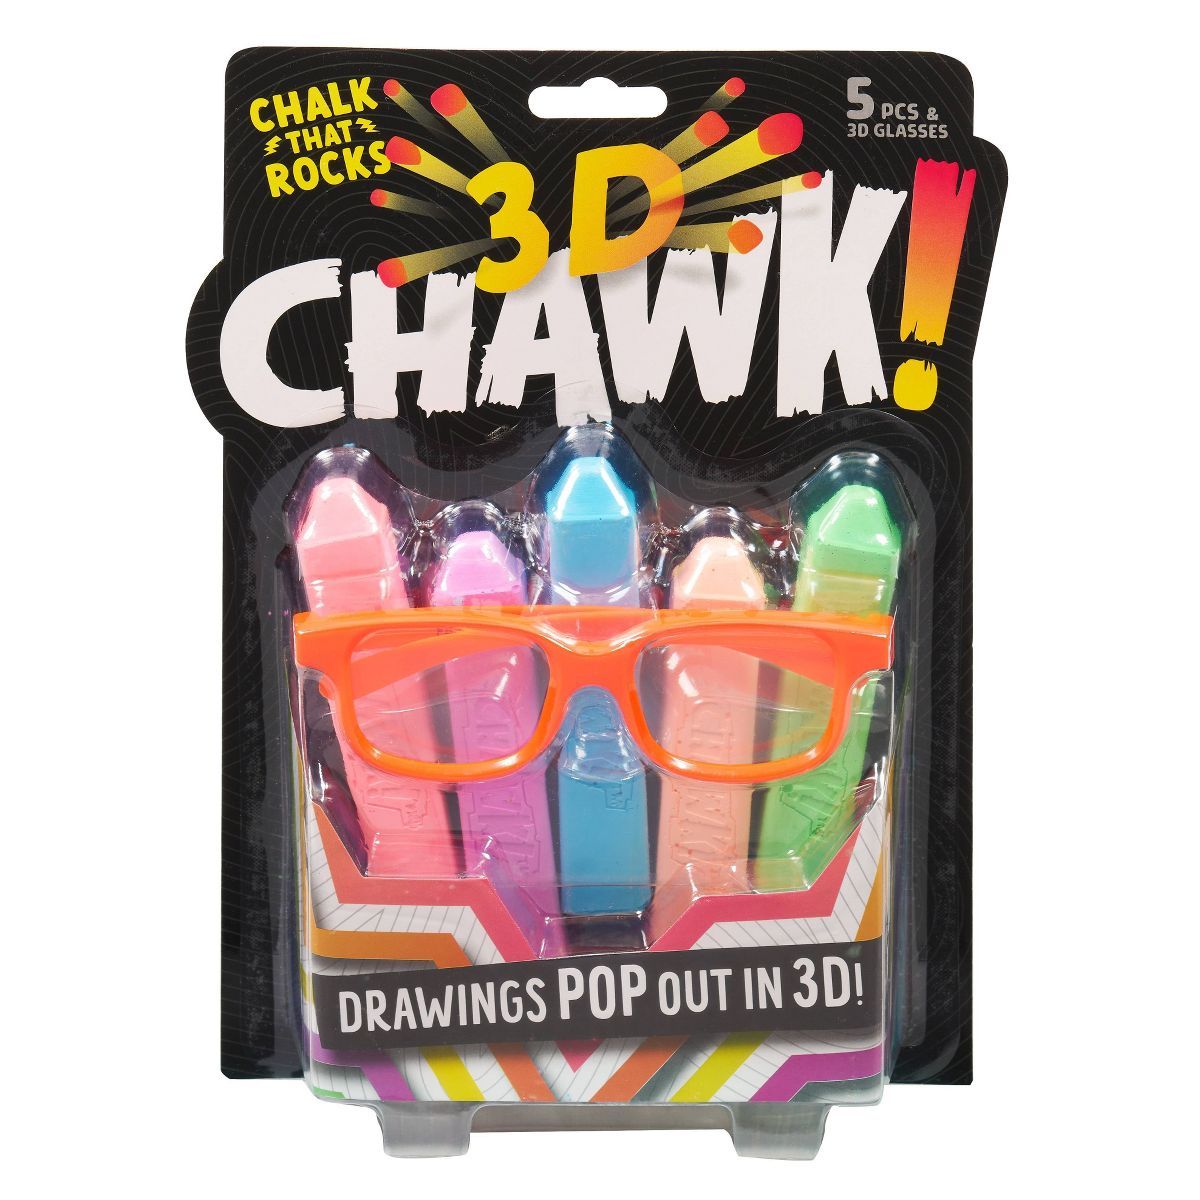 Chuckle & Roar 3D Chawk! Sidewalk Chalk with 3D Glasses - 5ct | Target